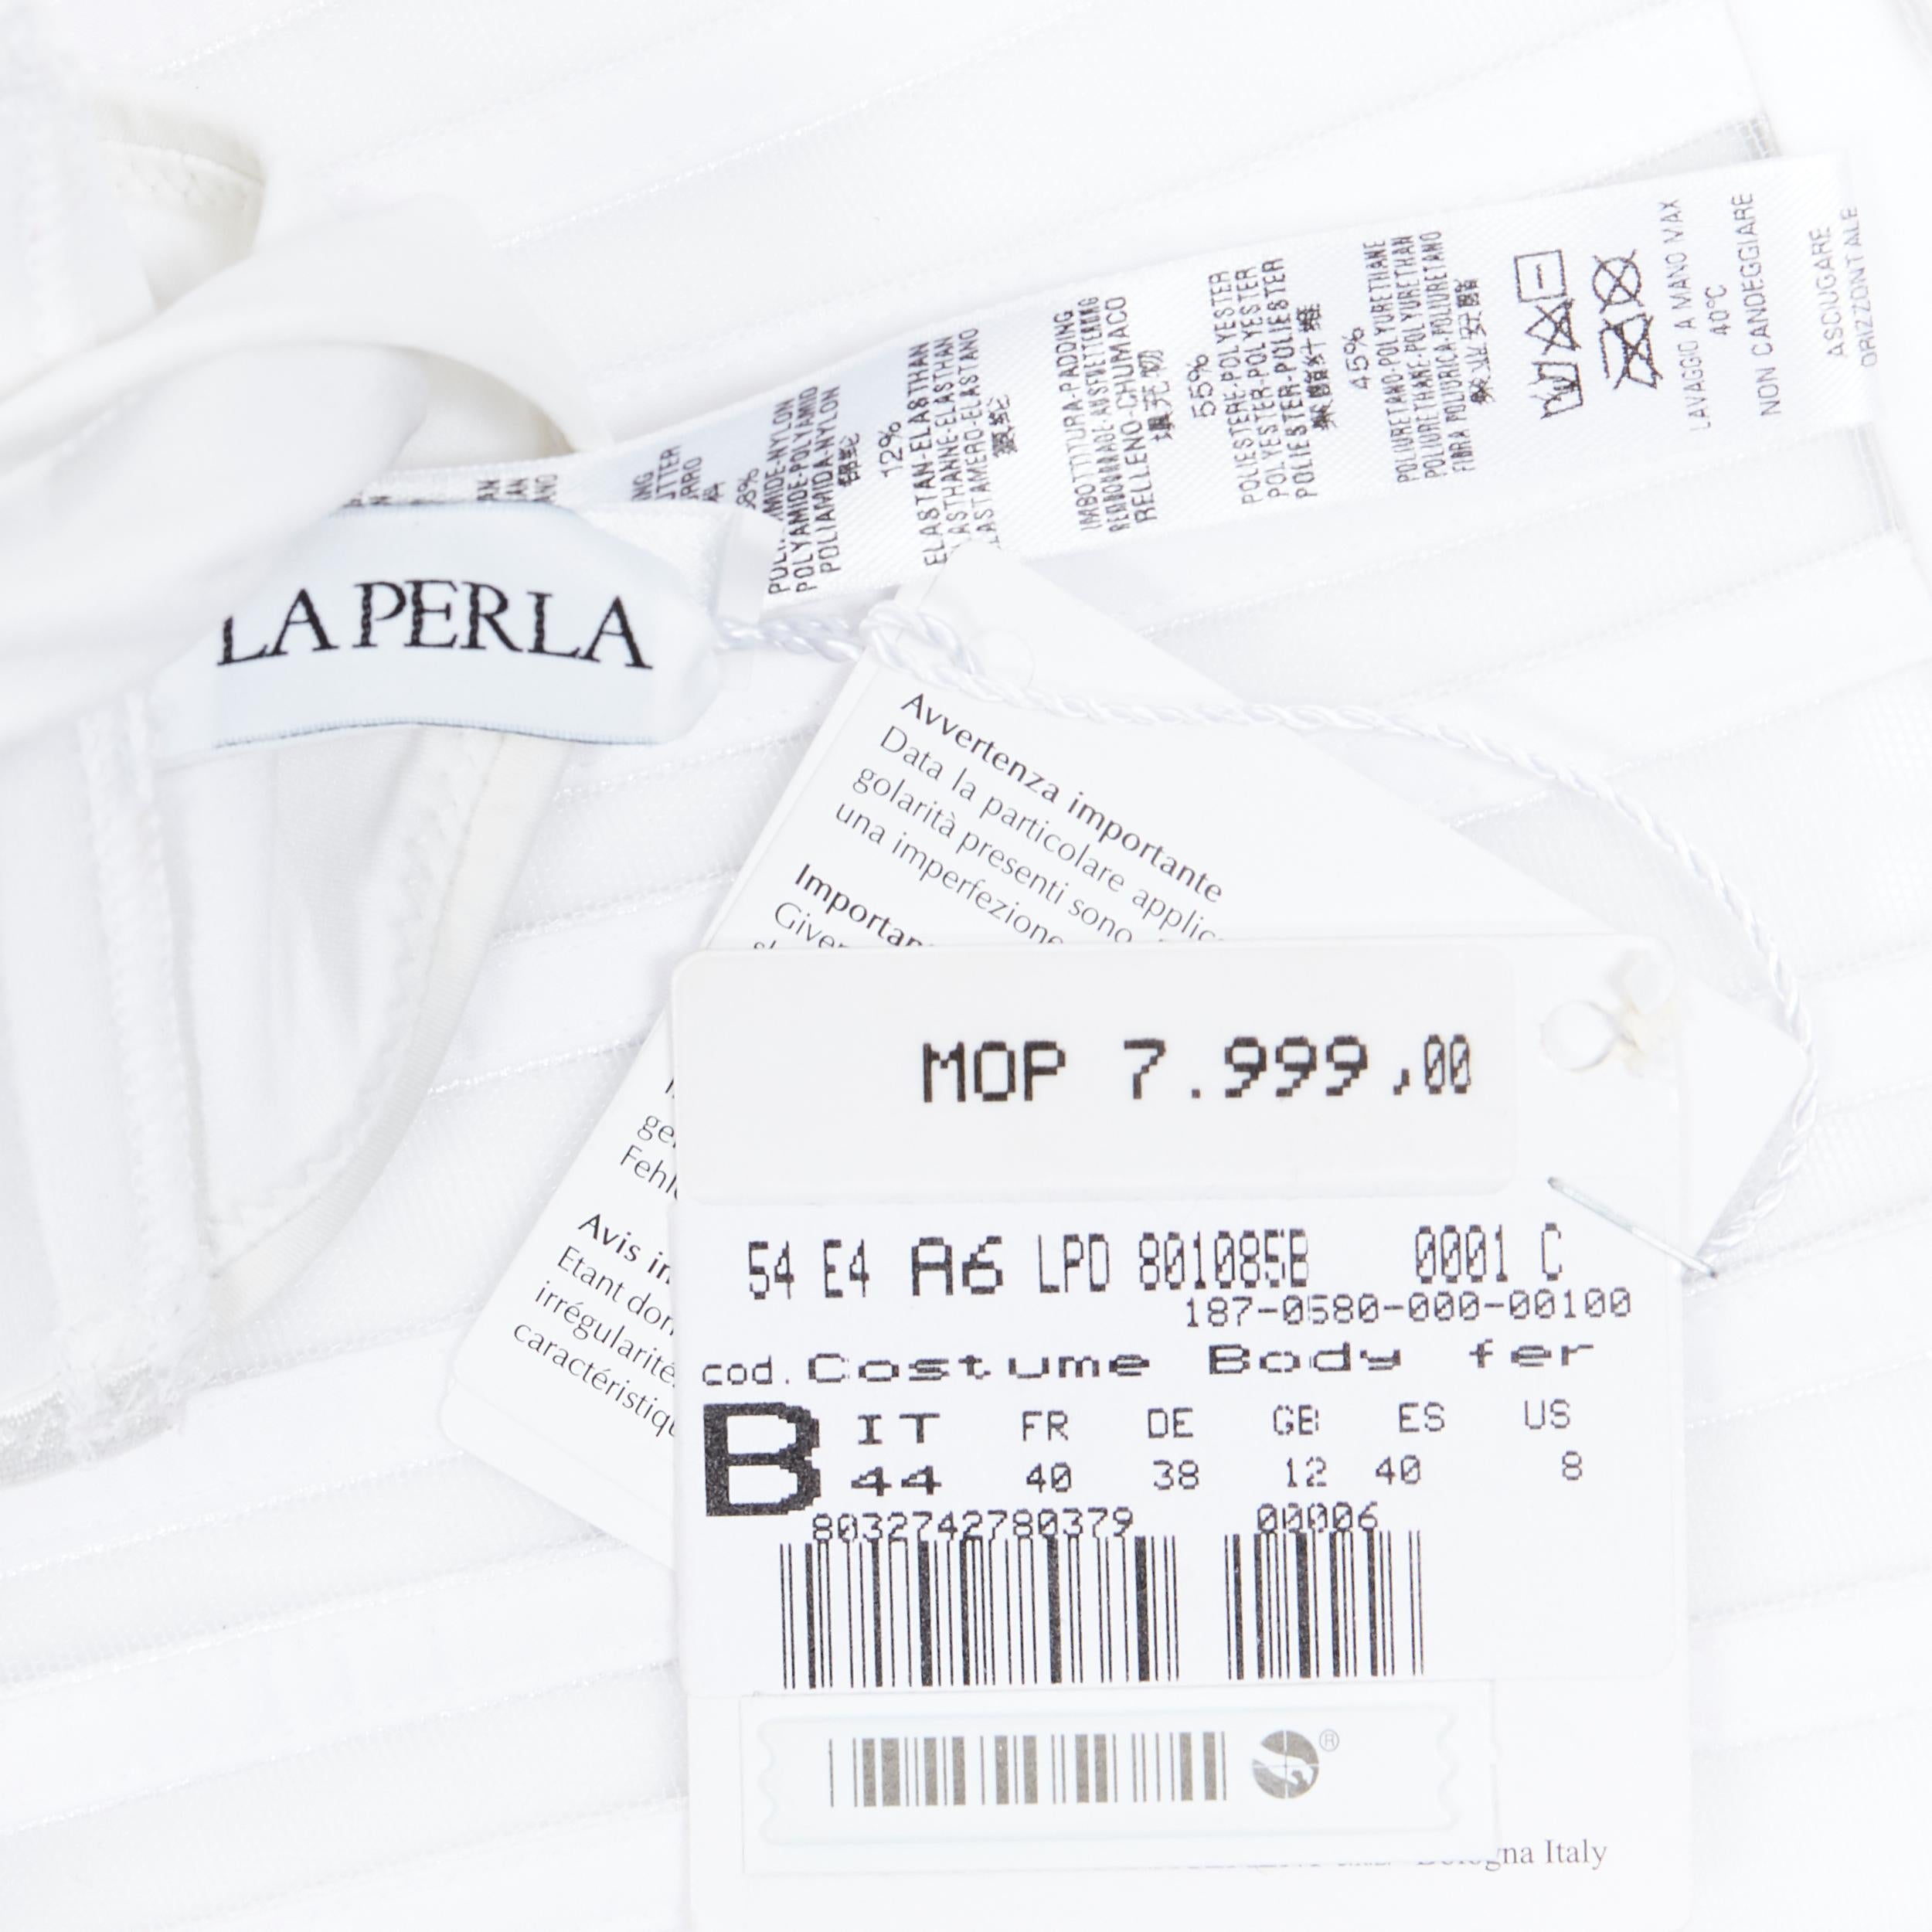 new LA PERLA Graphique Couture white boned sheer body monokini swimsuit IT44B M 3